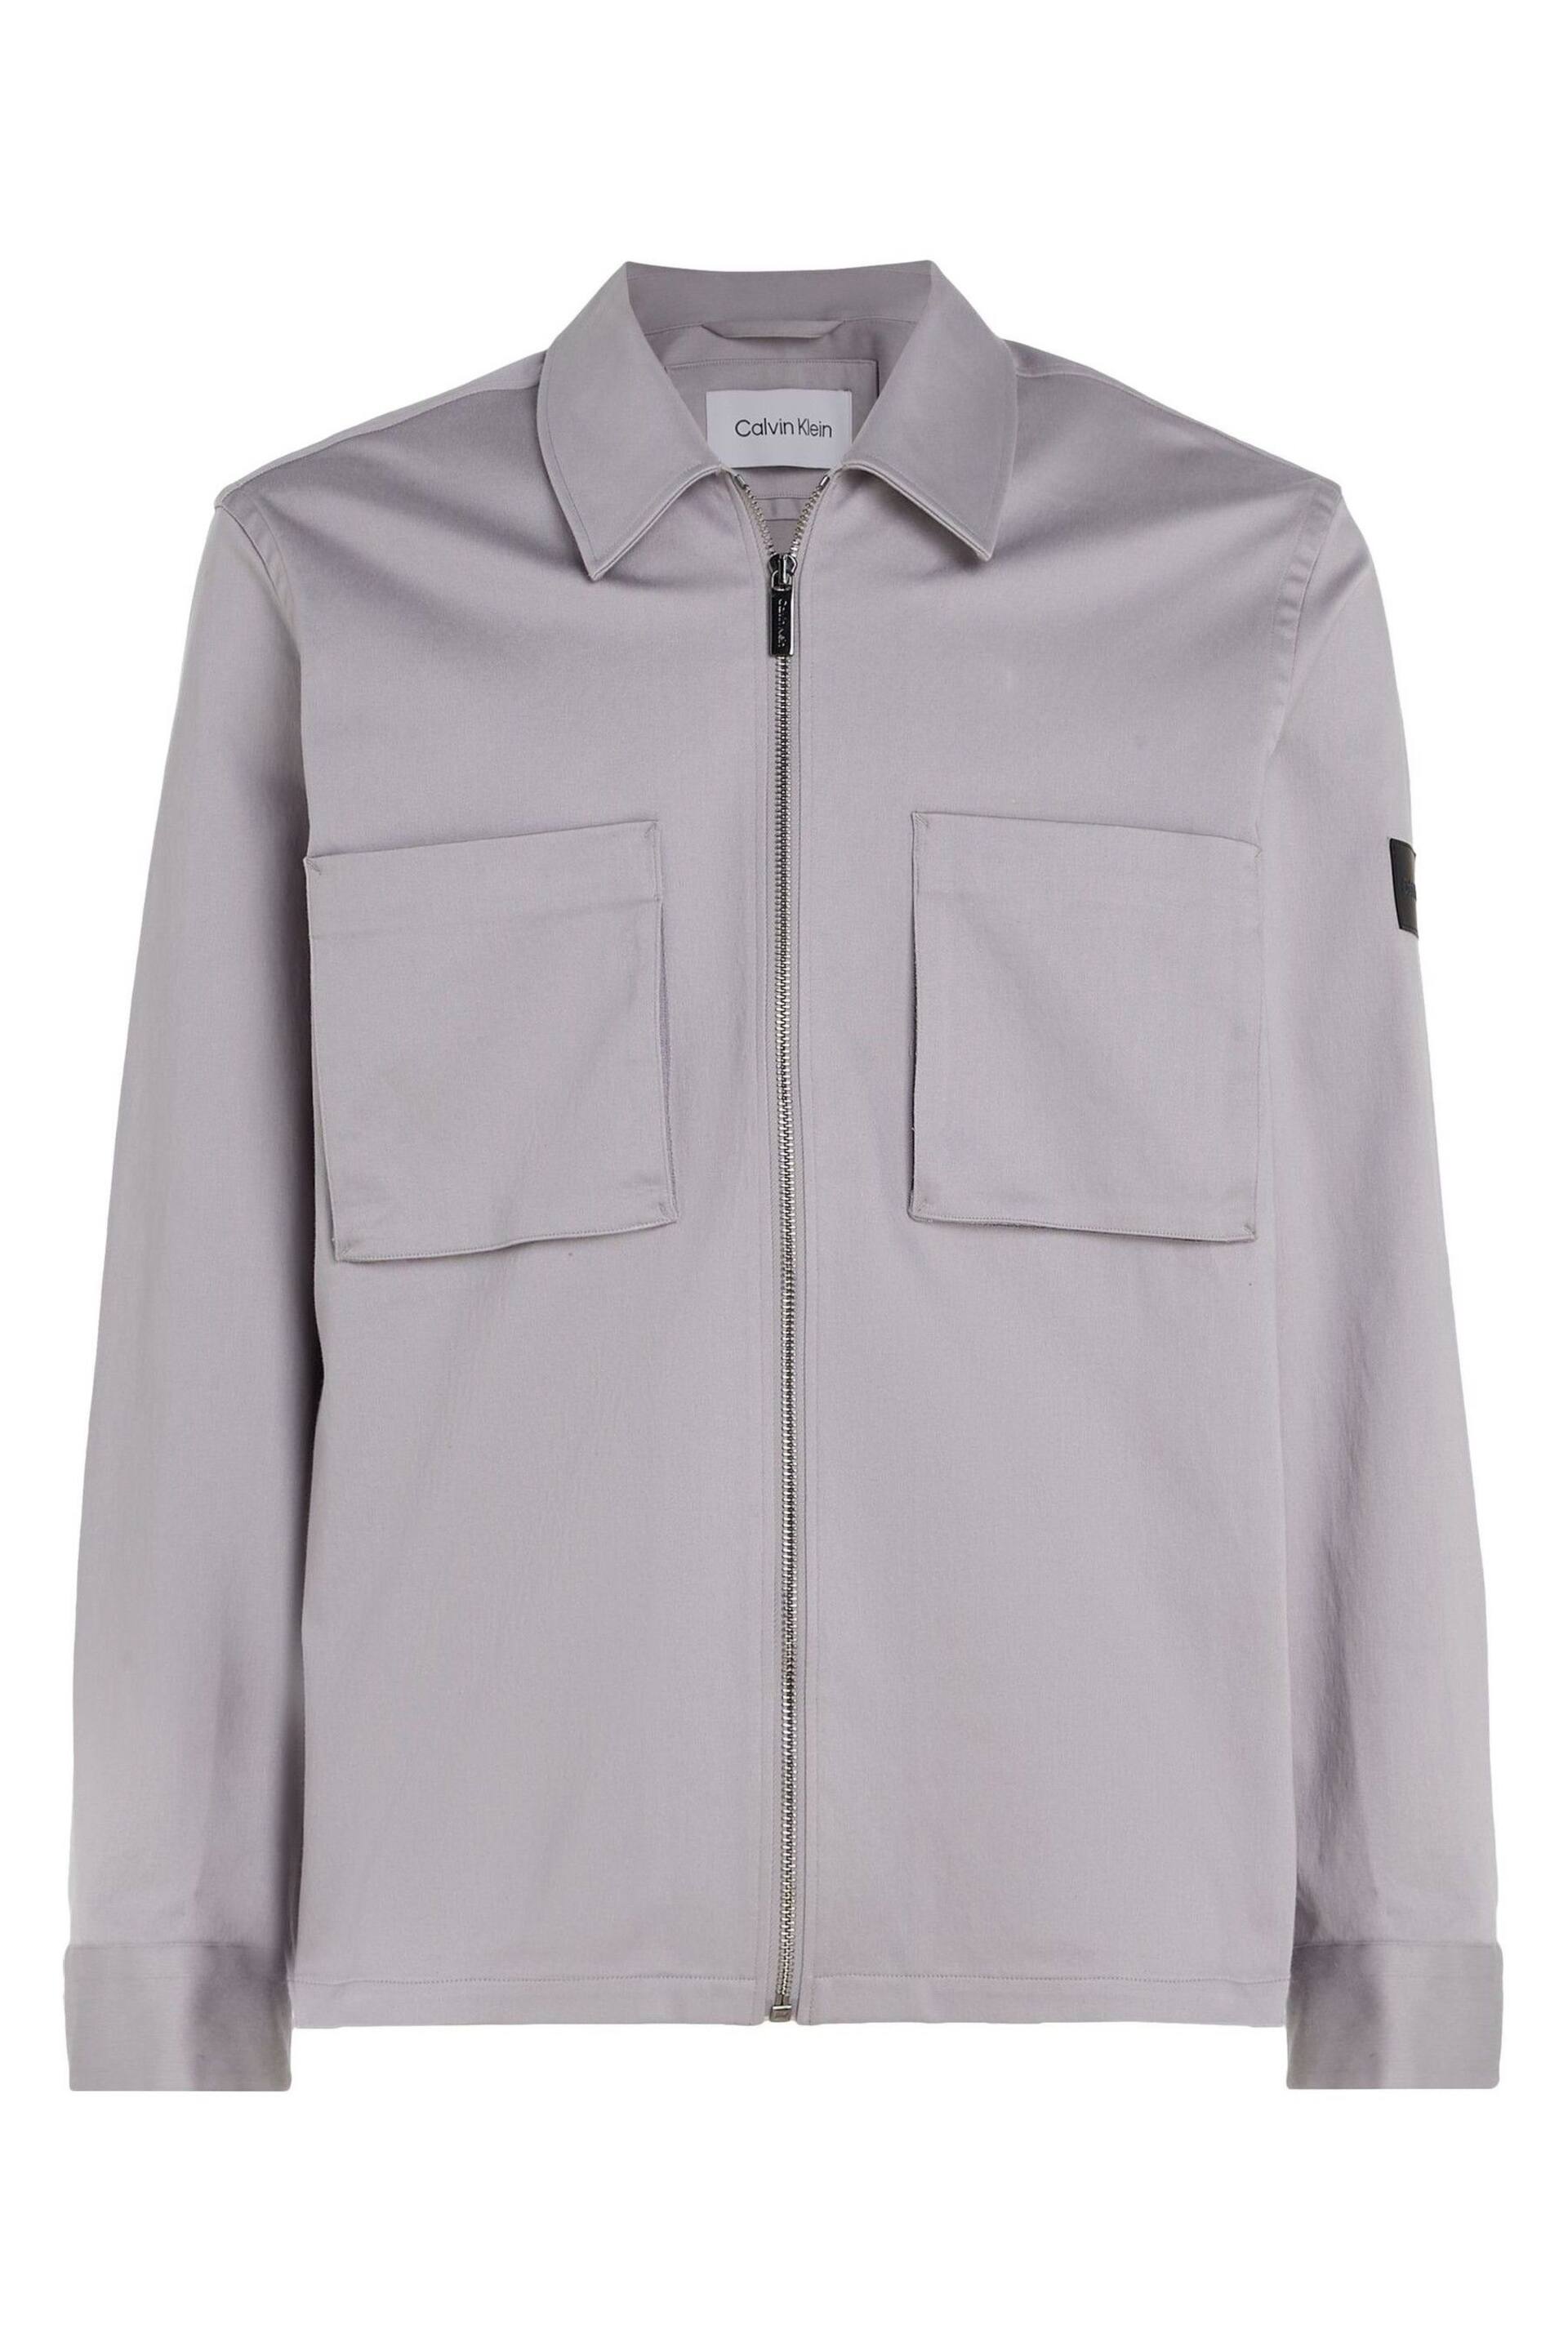 Calvin Klein Grey 3D Pocket Overshirt - Image 4 of 6